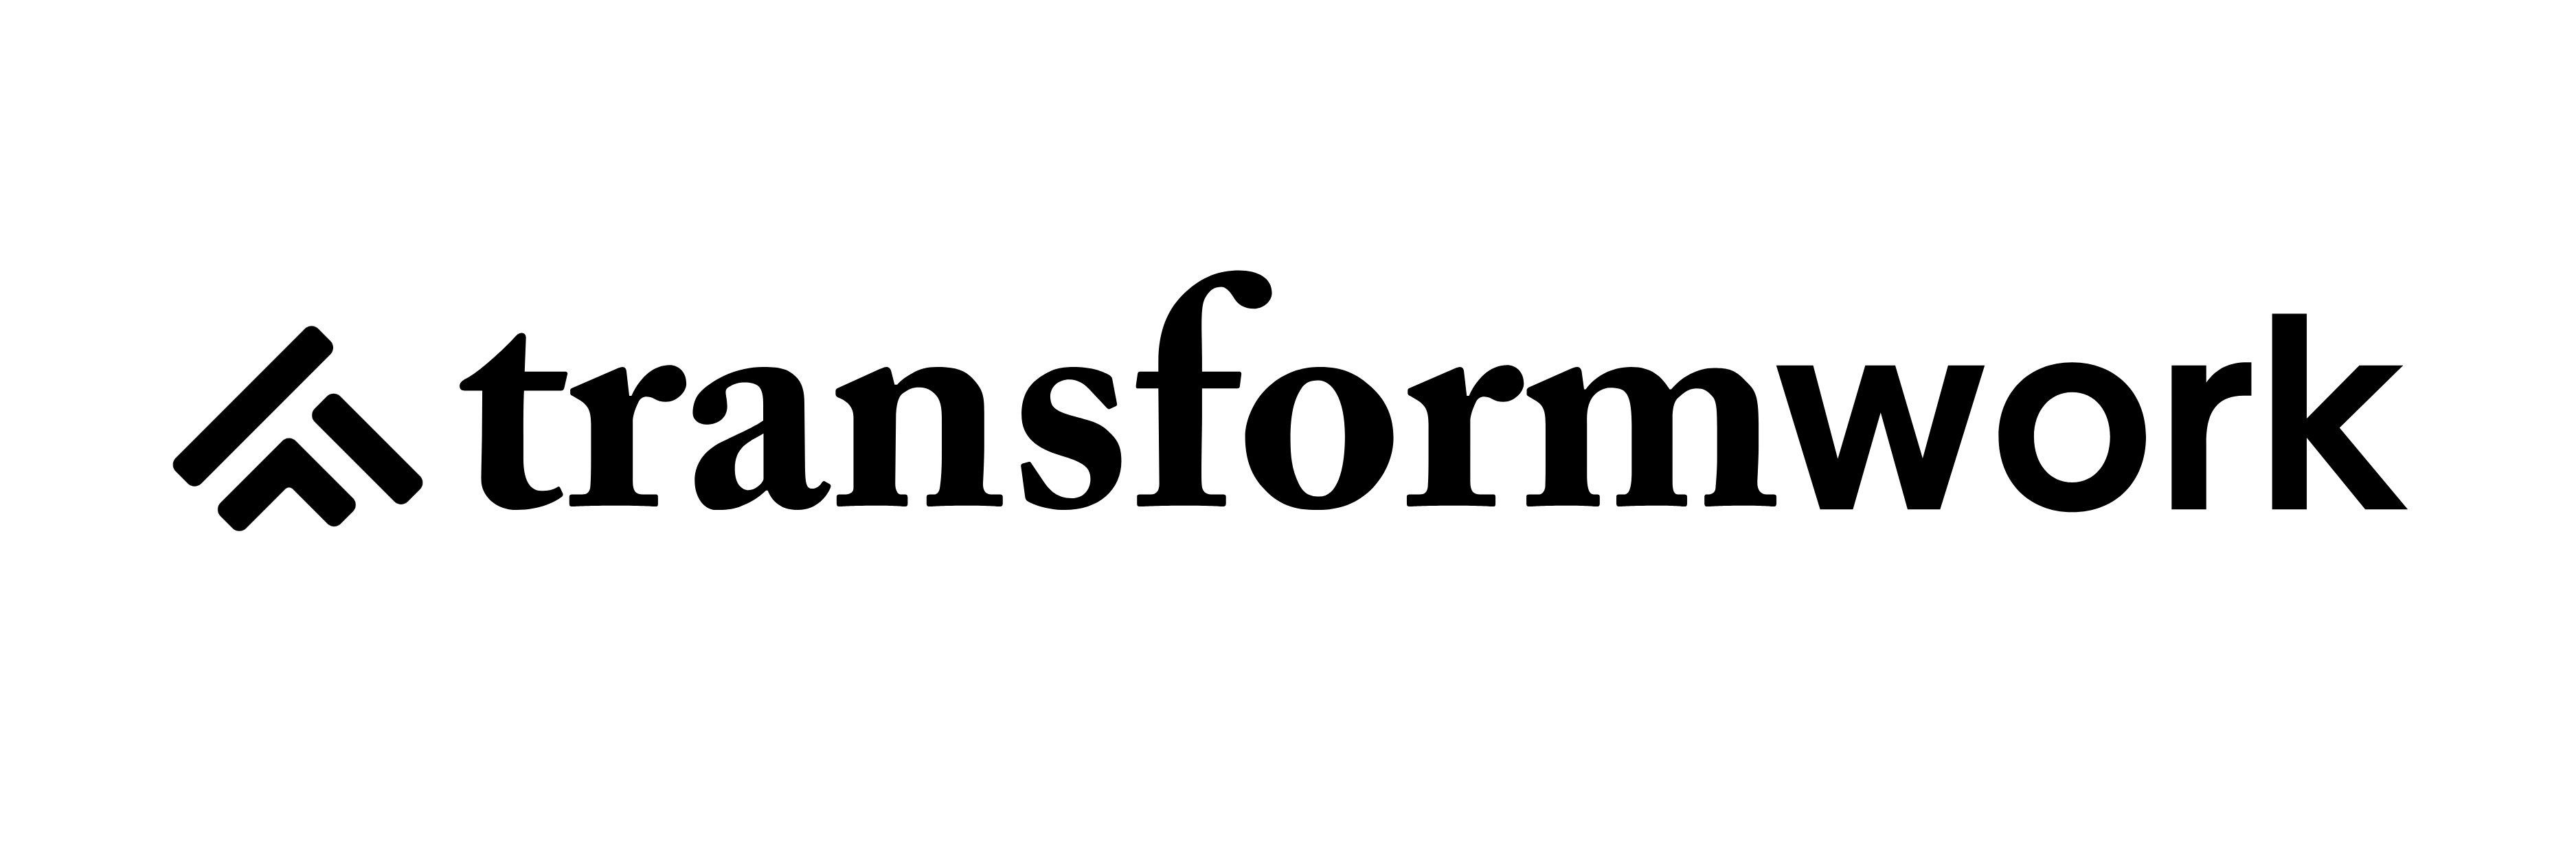 TW Logo black